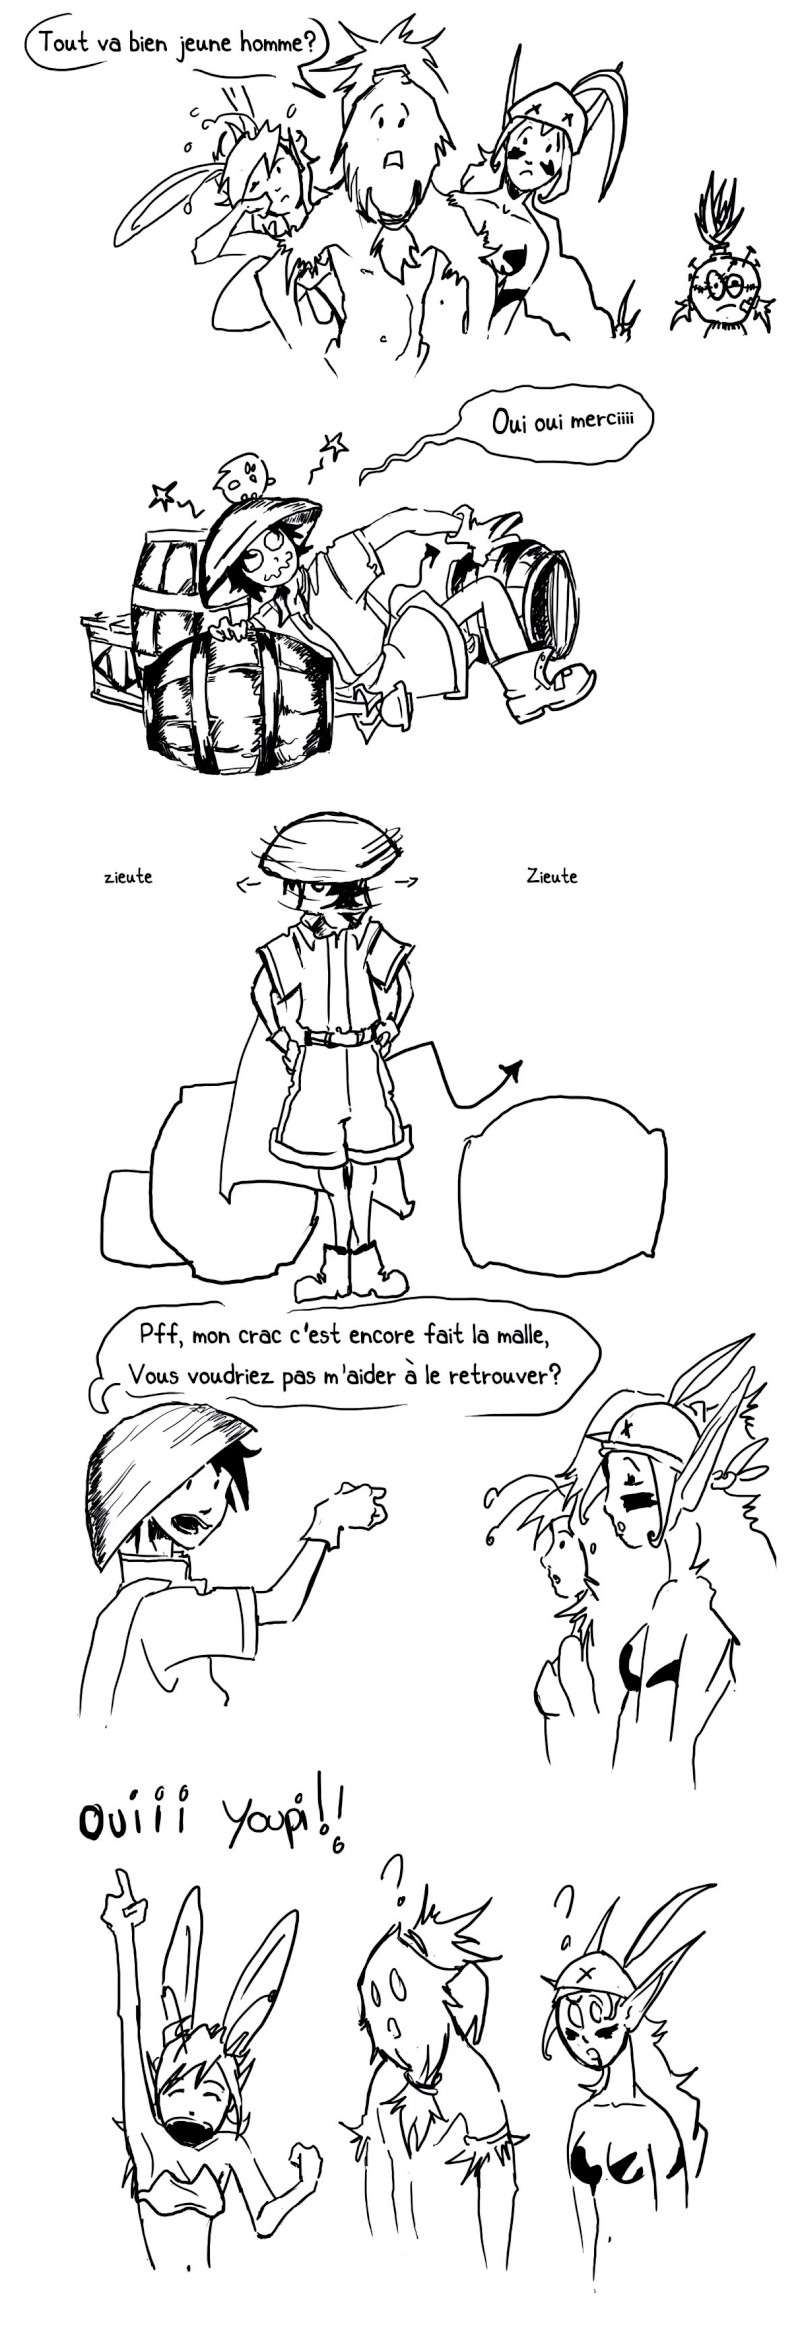 seik et ekis, les aventures ILLUSTREES - Page 3 Strip120